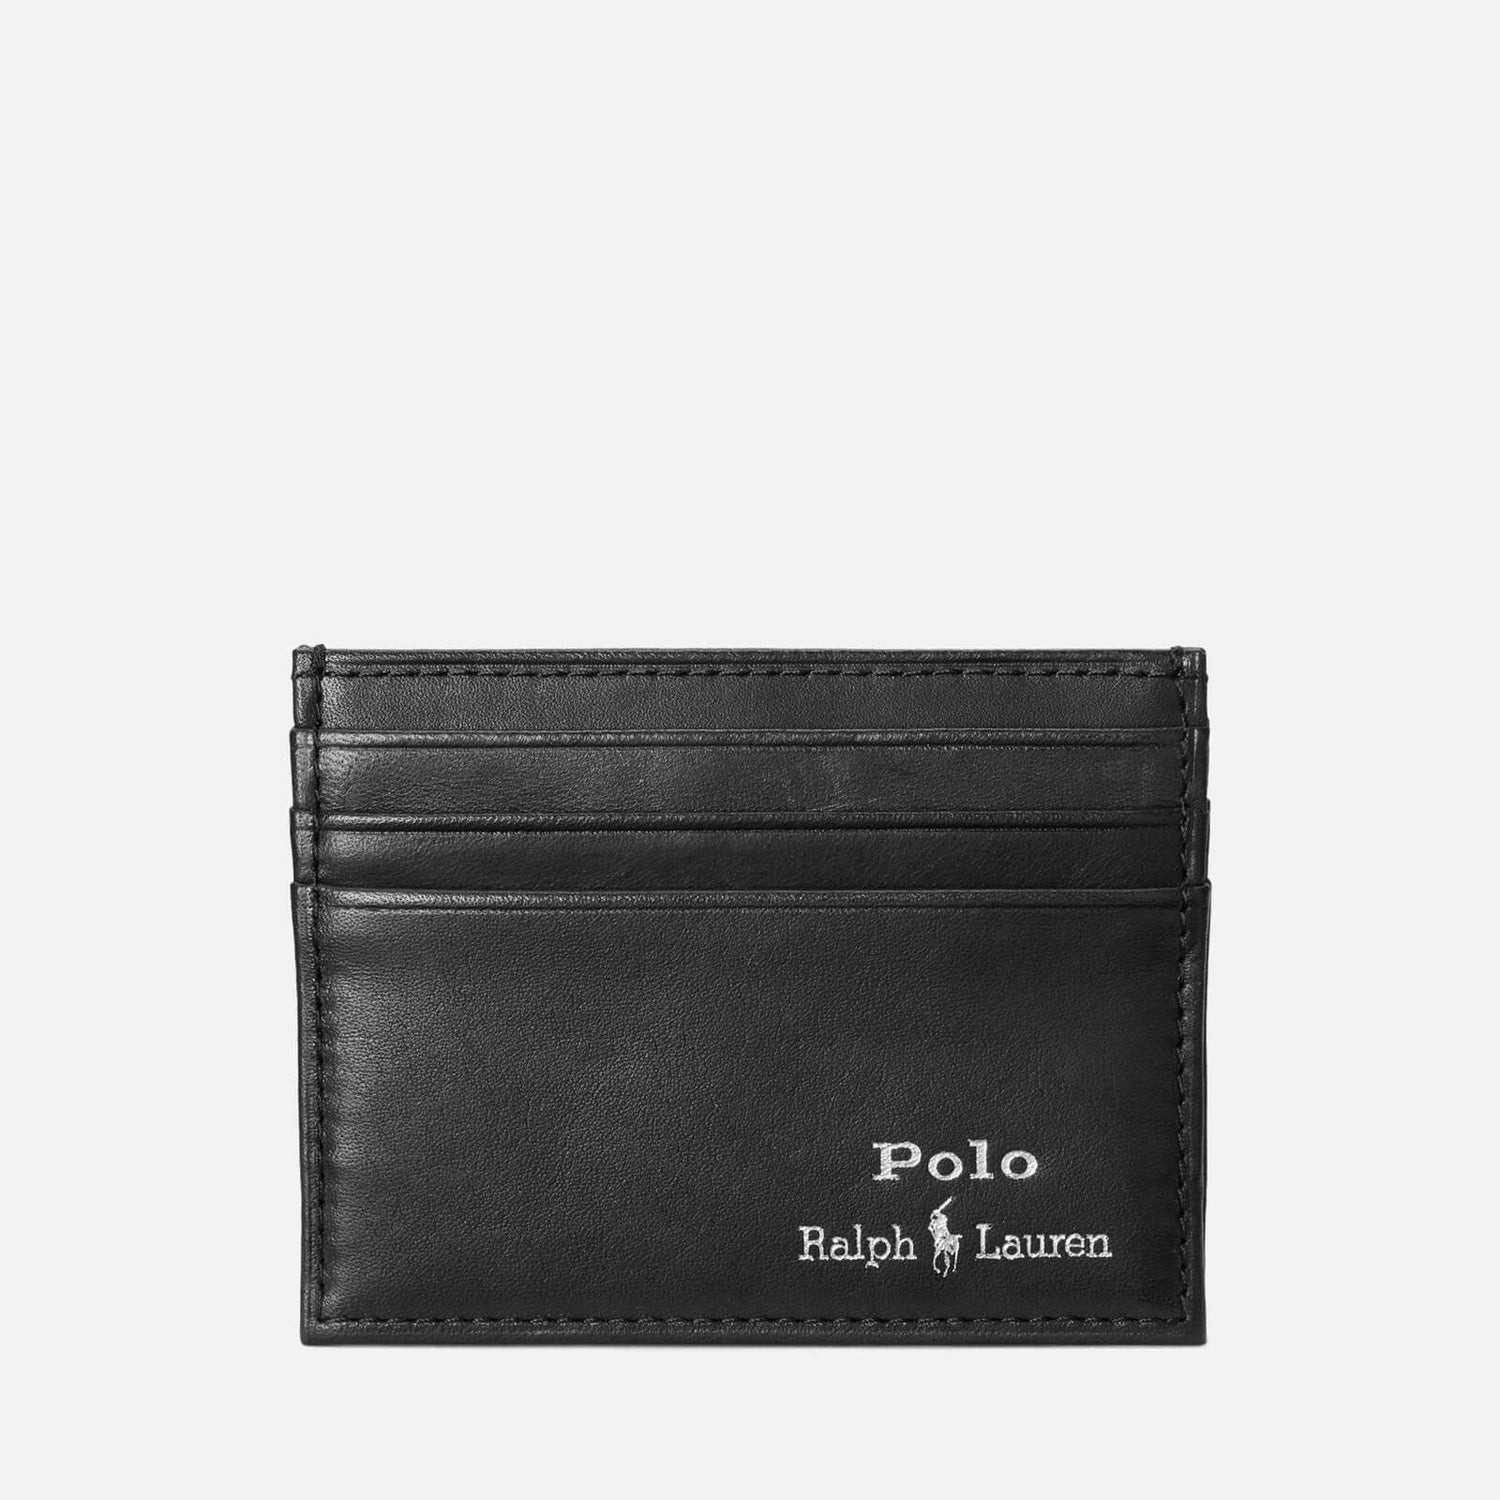 Polo Ralph Lauren Men's Smooth Leather Gold Foil Cardholder - Black